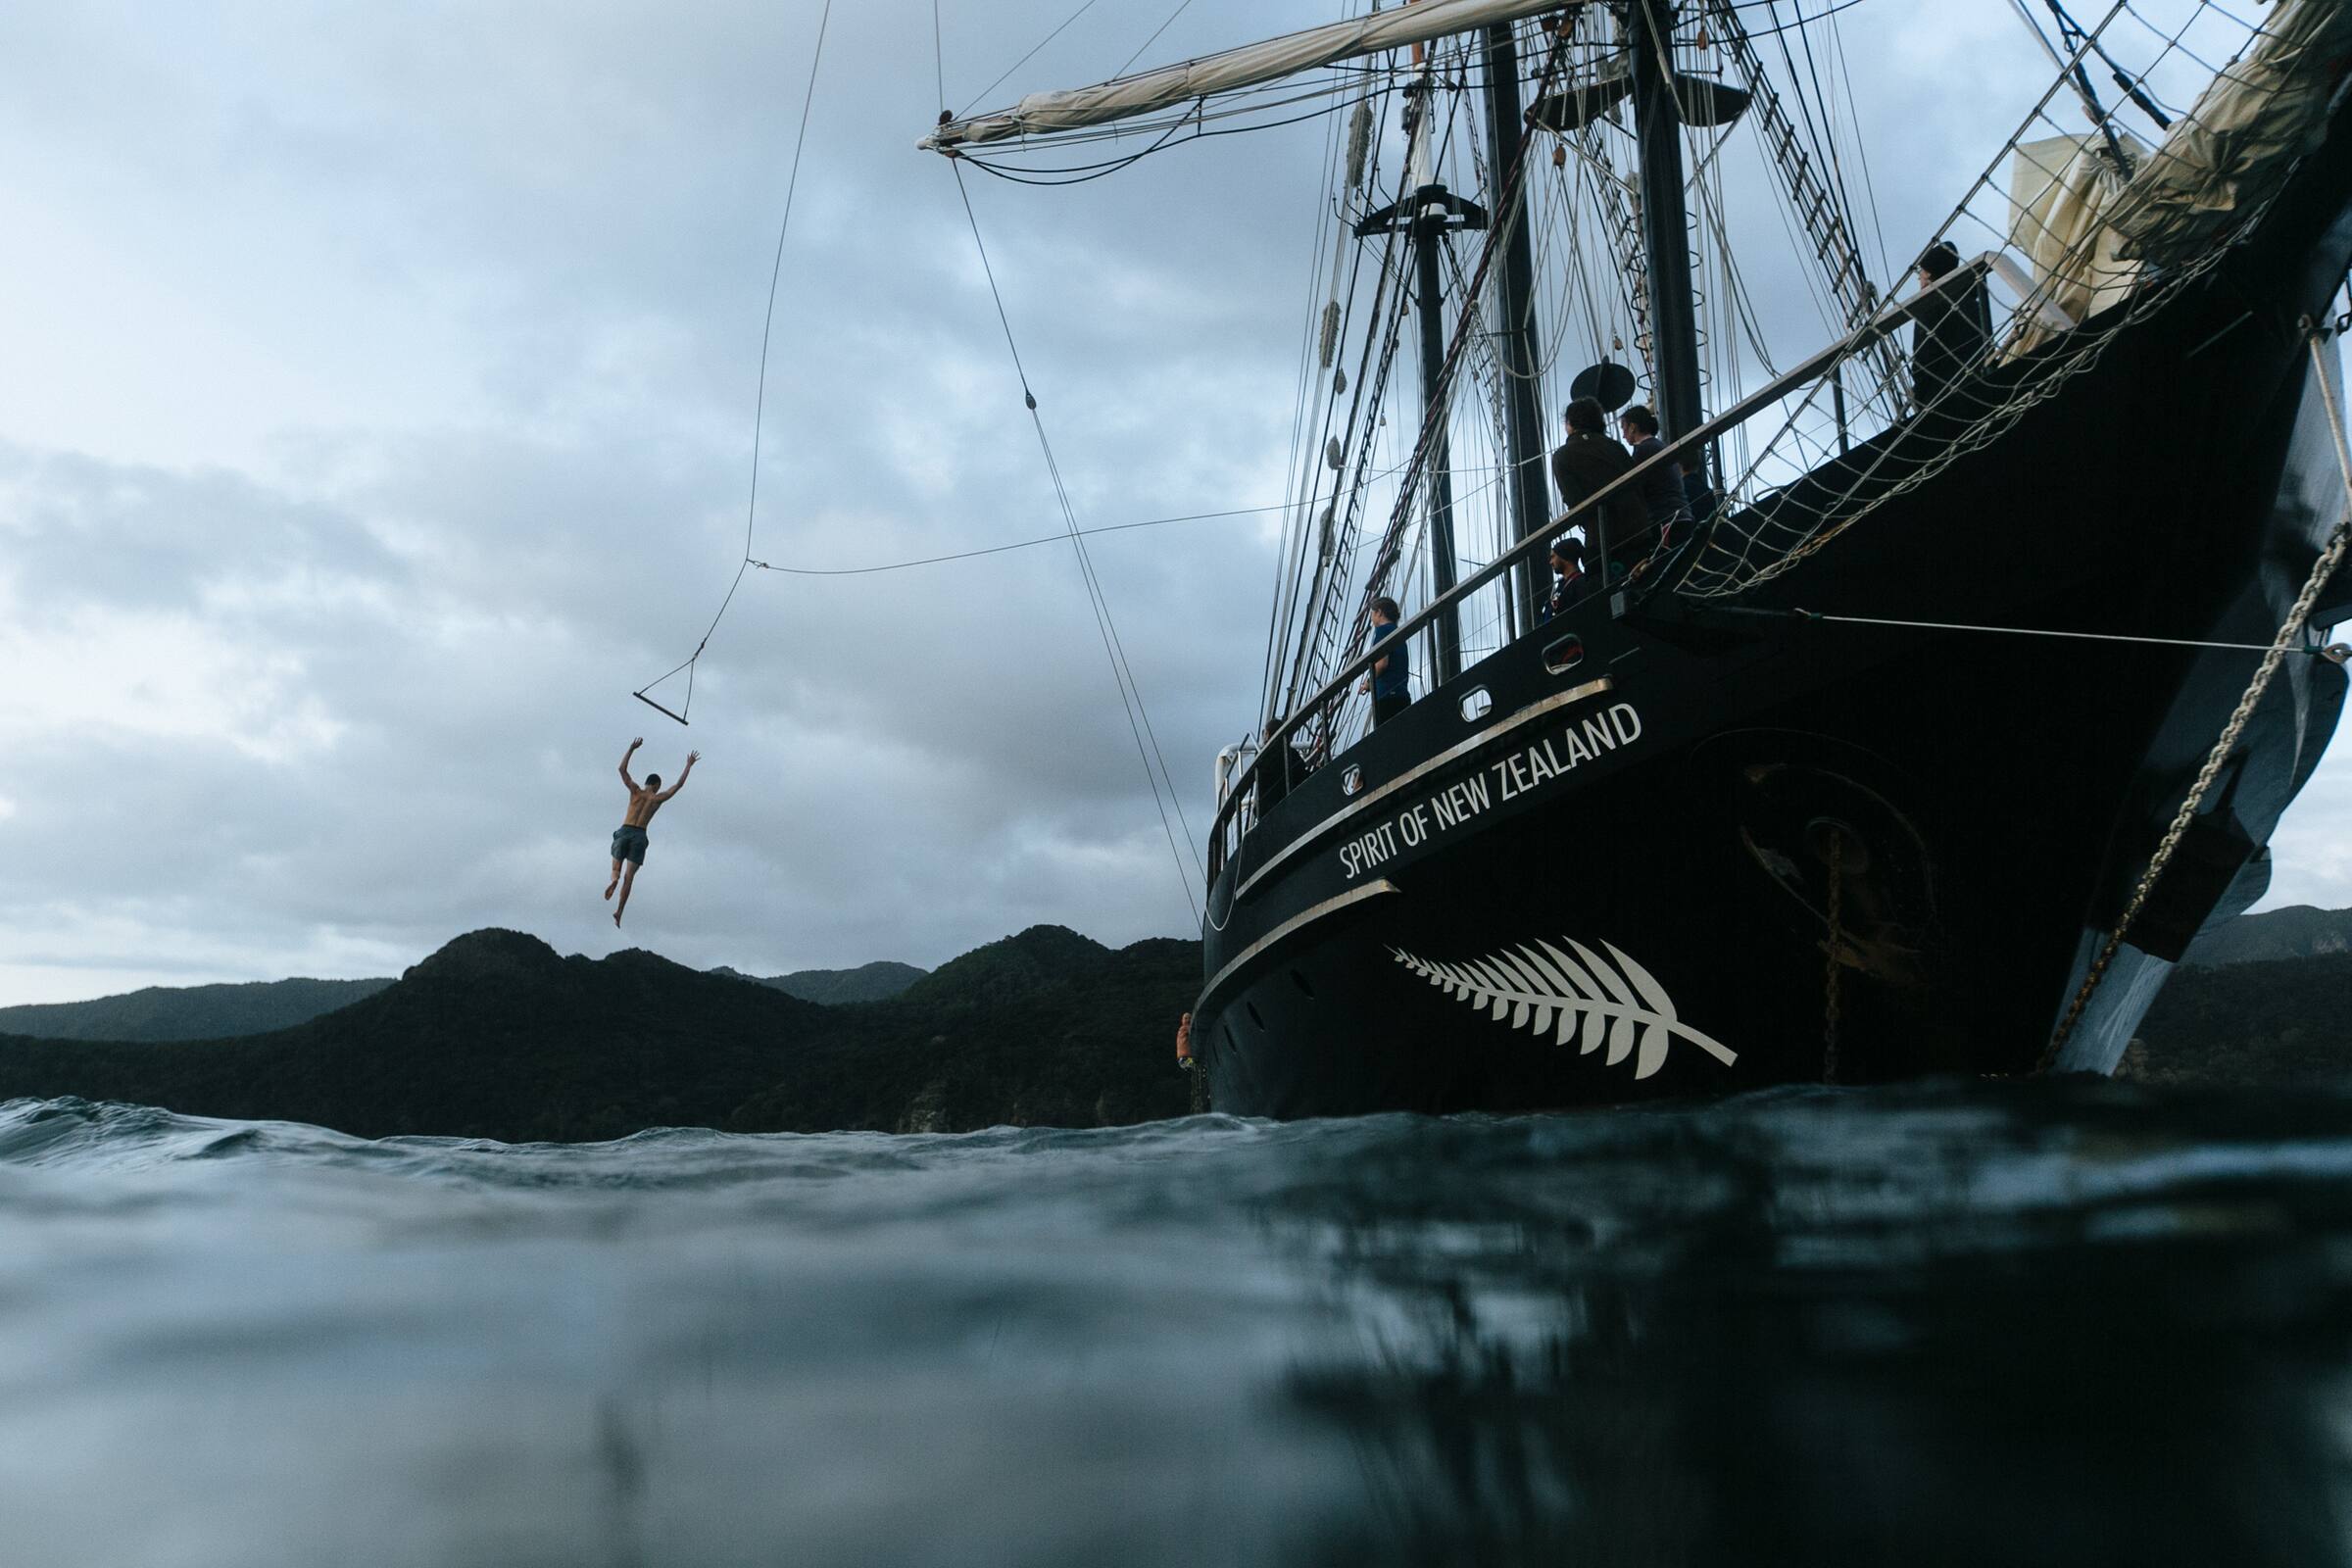 Boy swinging off the Spirit of adventure ship into the ocean